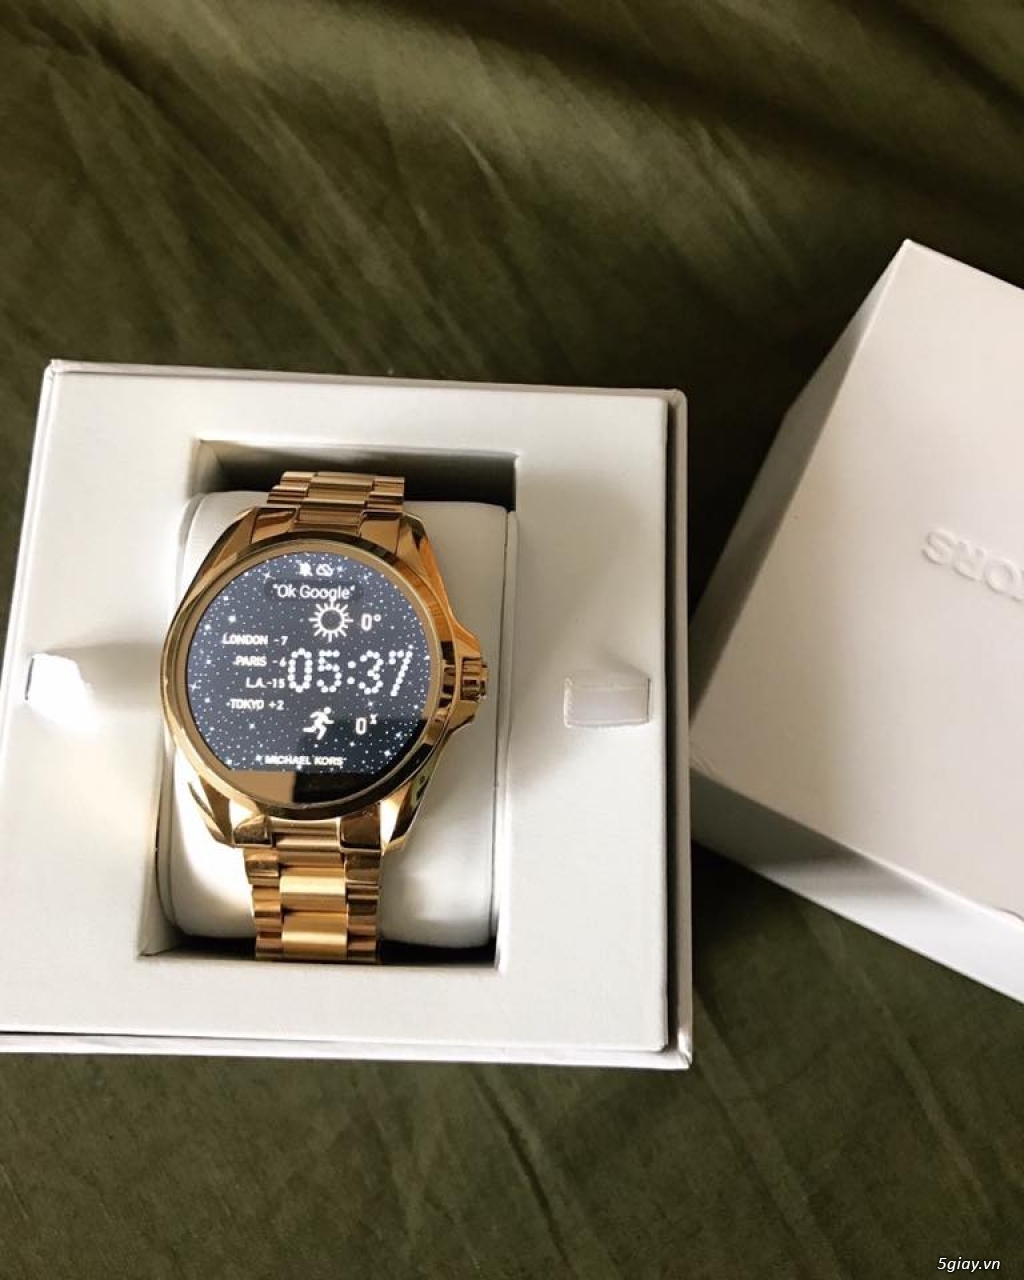 HCM - Đồng hồ Michael Kors - Smart Watch 99% like new Sz 44mm